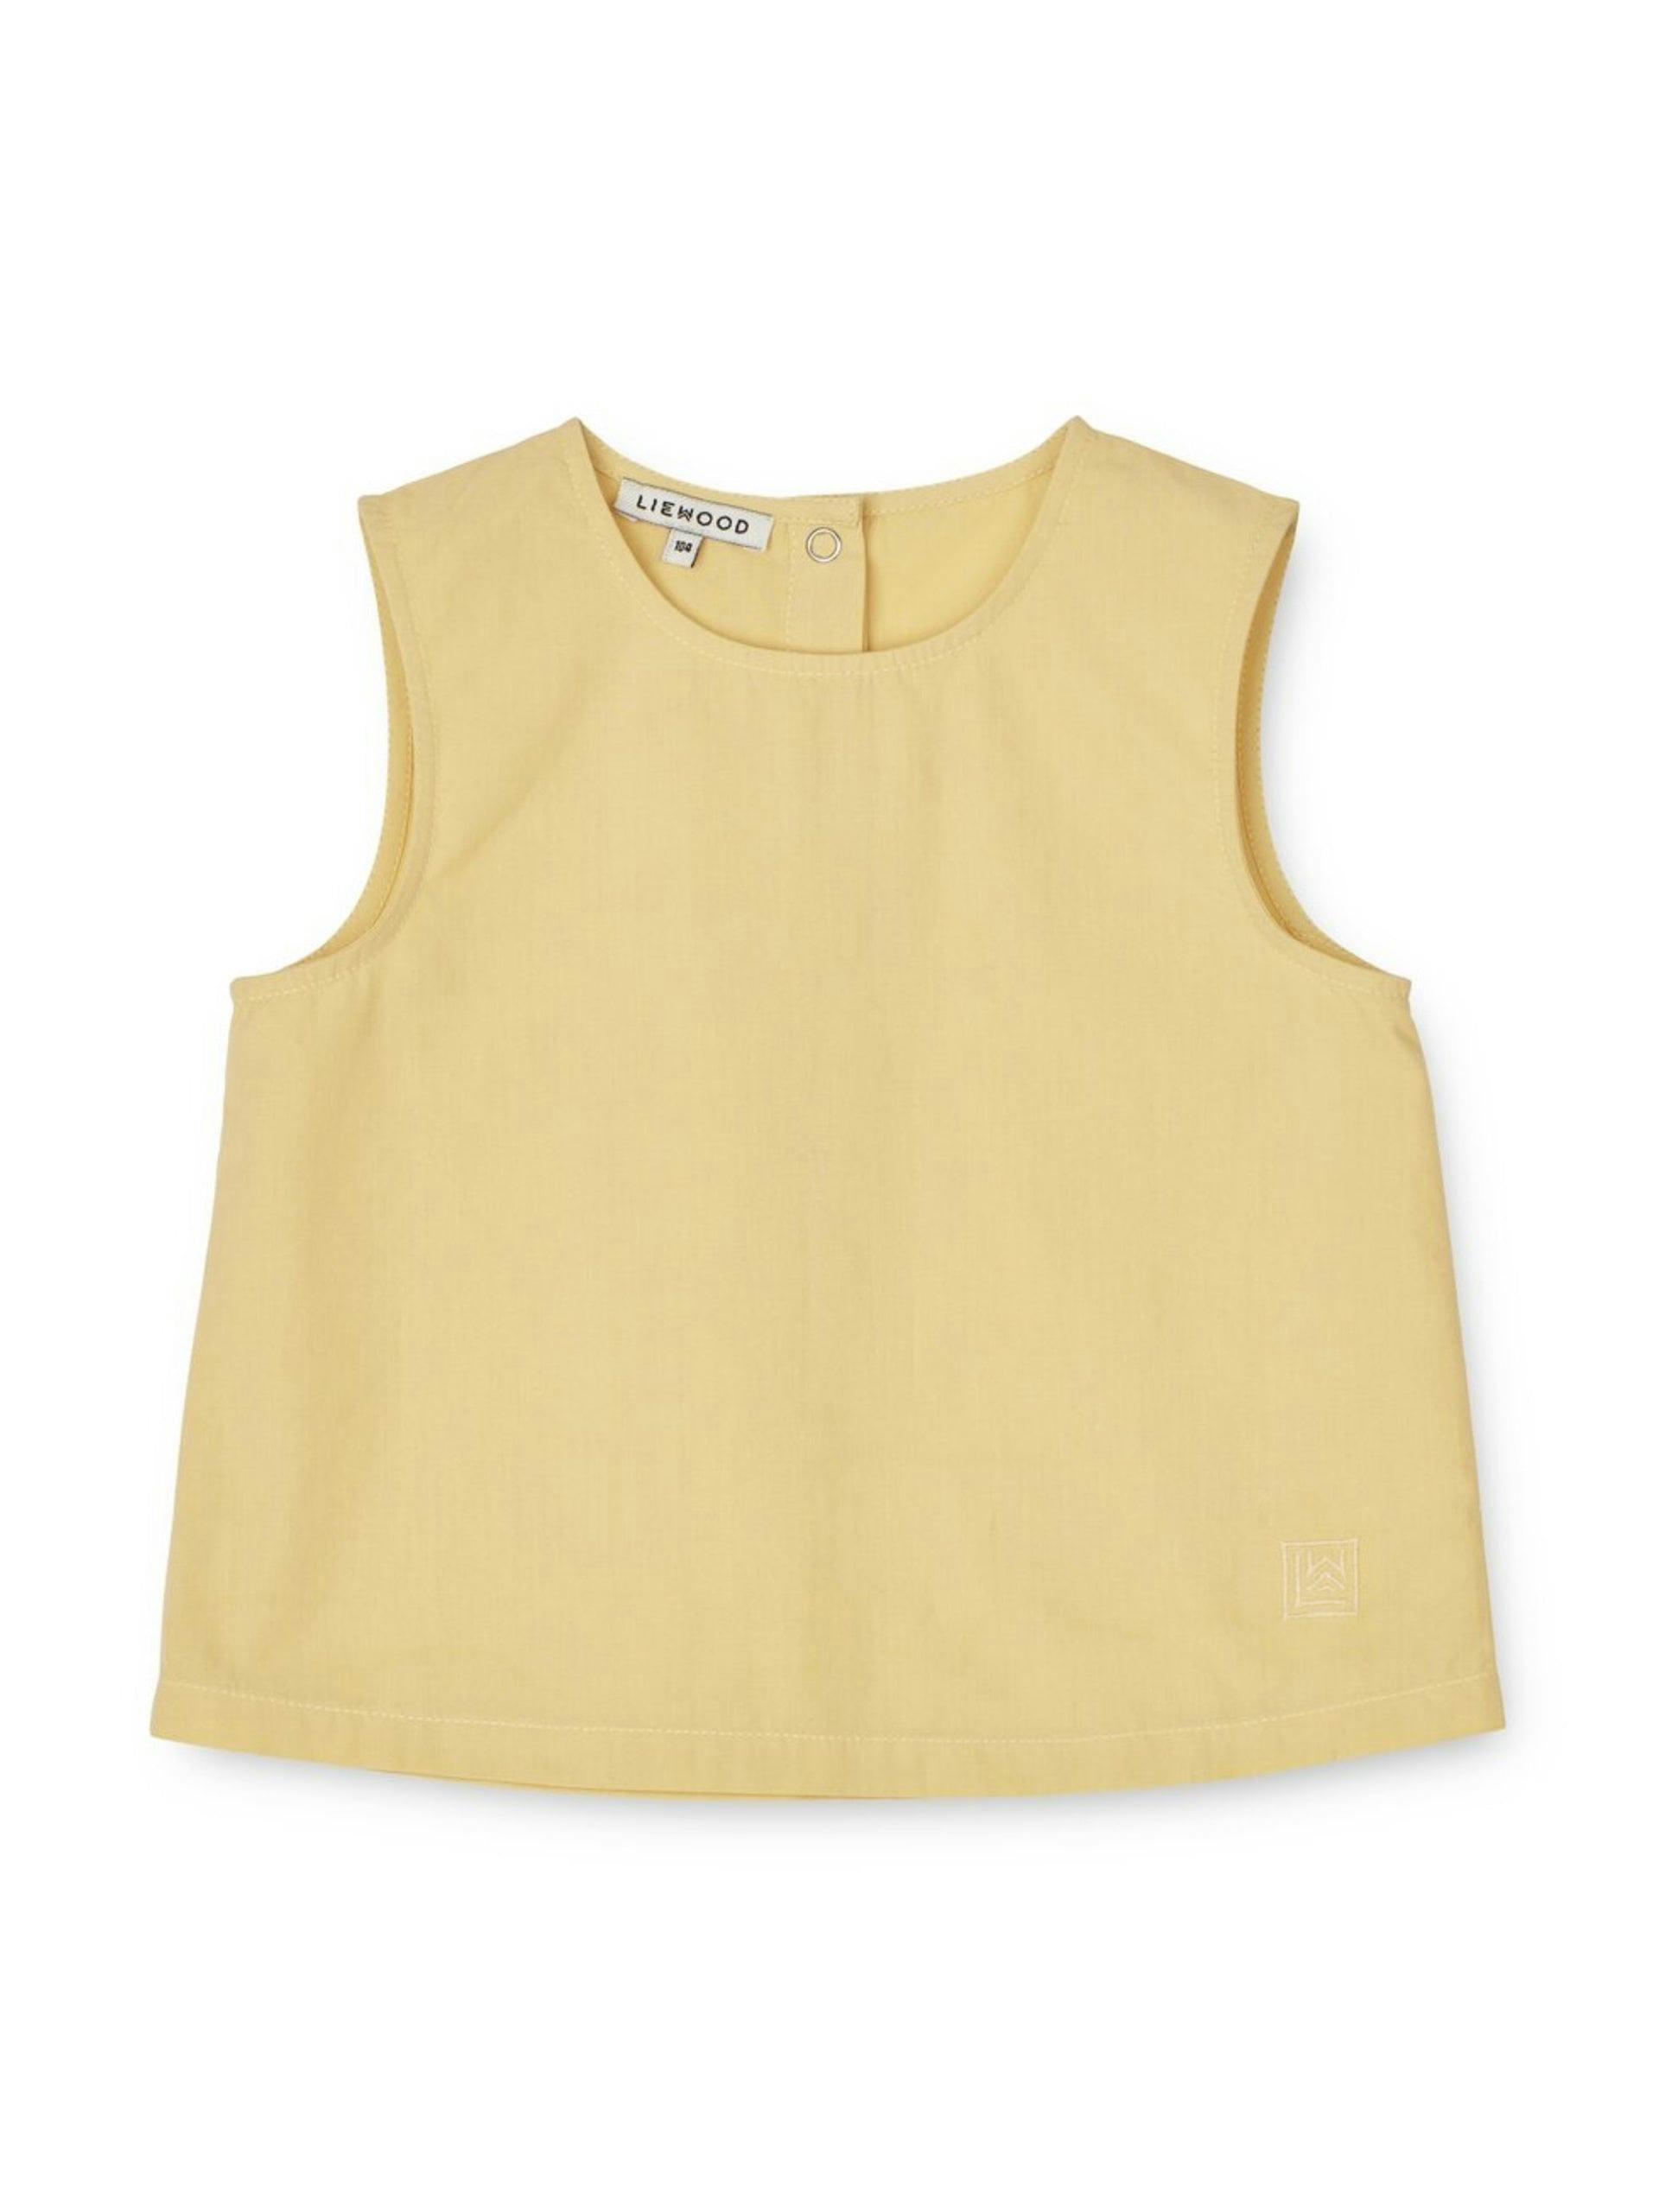 Yellow sleeveless top